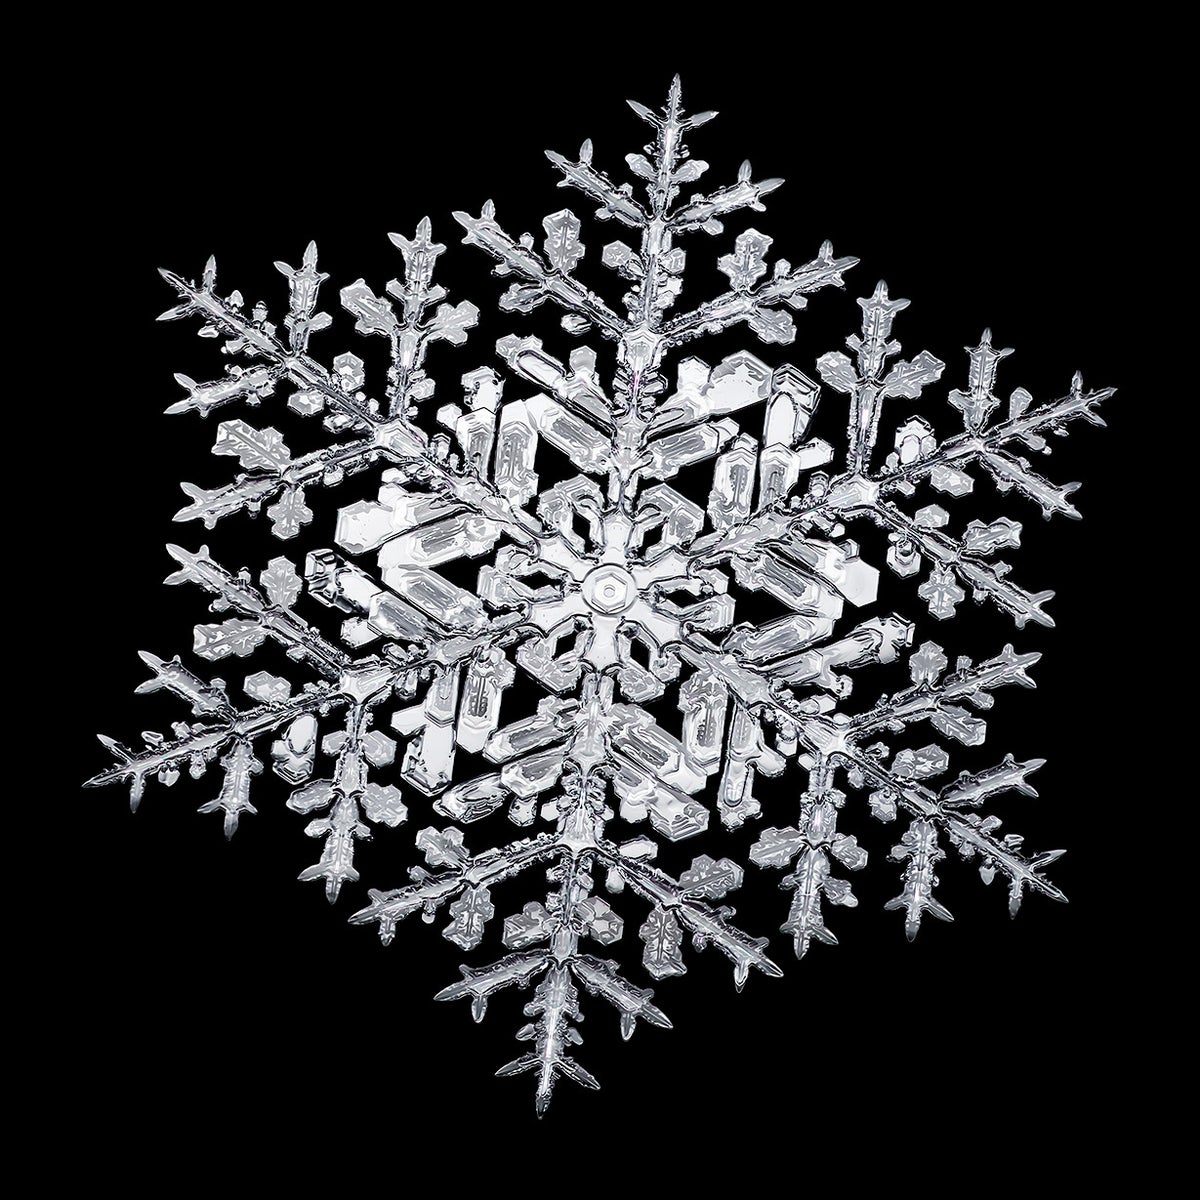 Stellar dendrite snowflake.